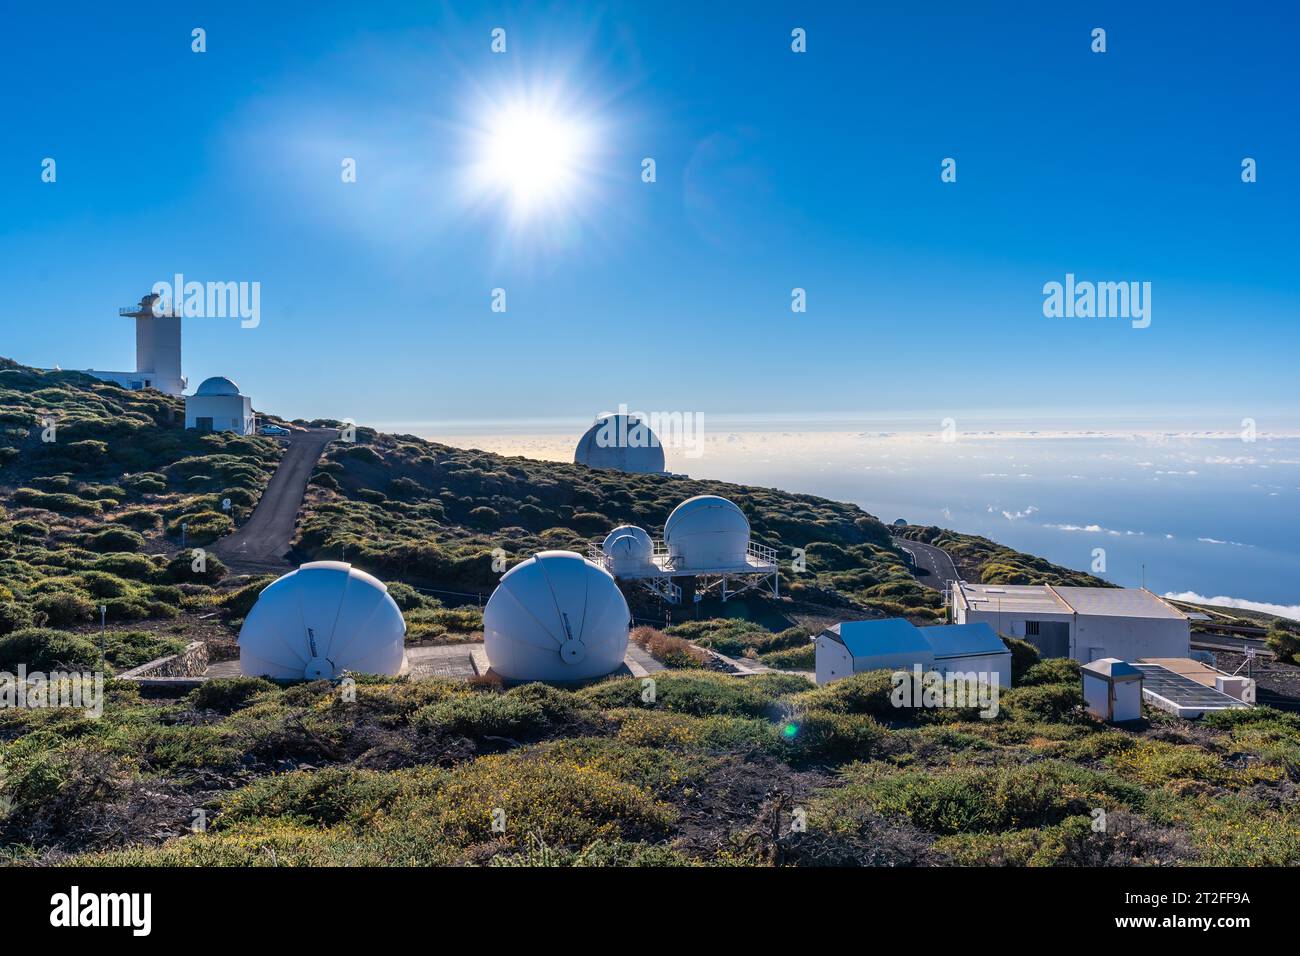 Observatories of the Roque de los Muchachos in the Caldera de Taburiente with a sea of nuts below one summer afternoon, La Palma, Canary Islands. Stock Photo